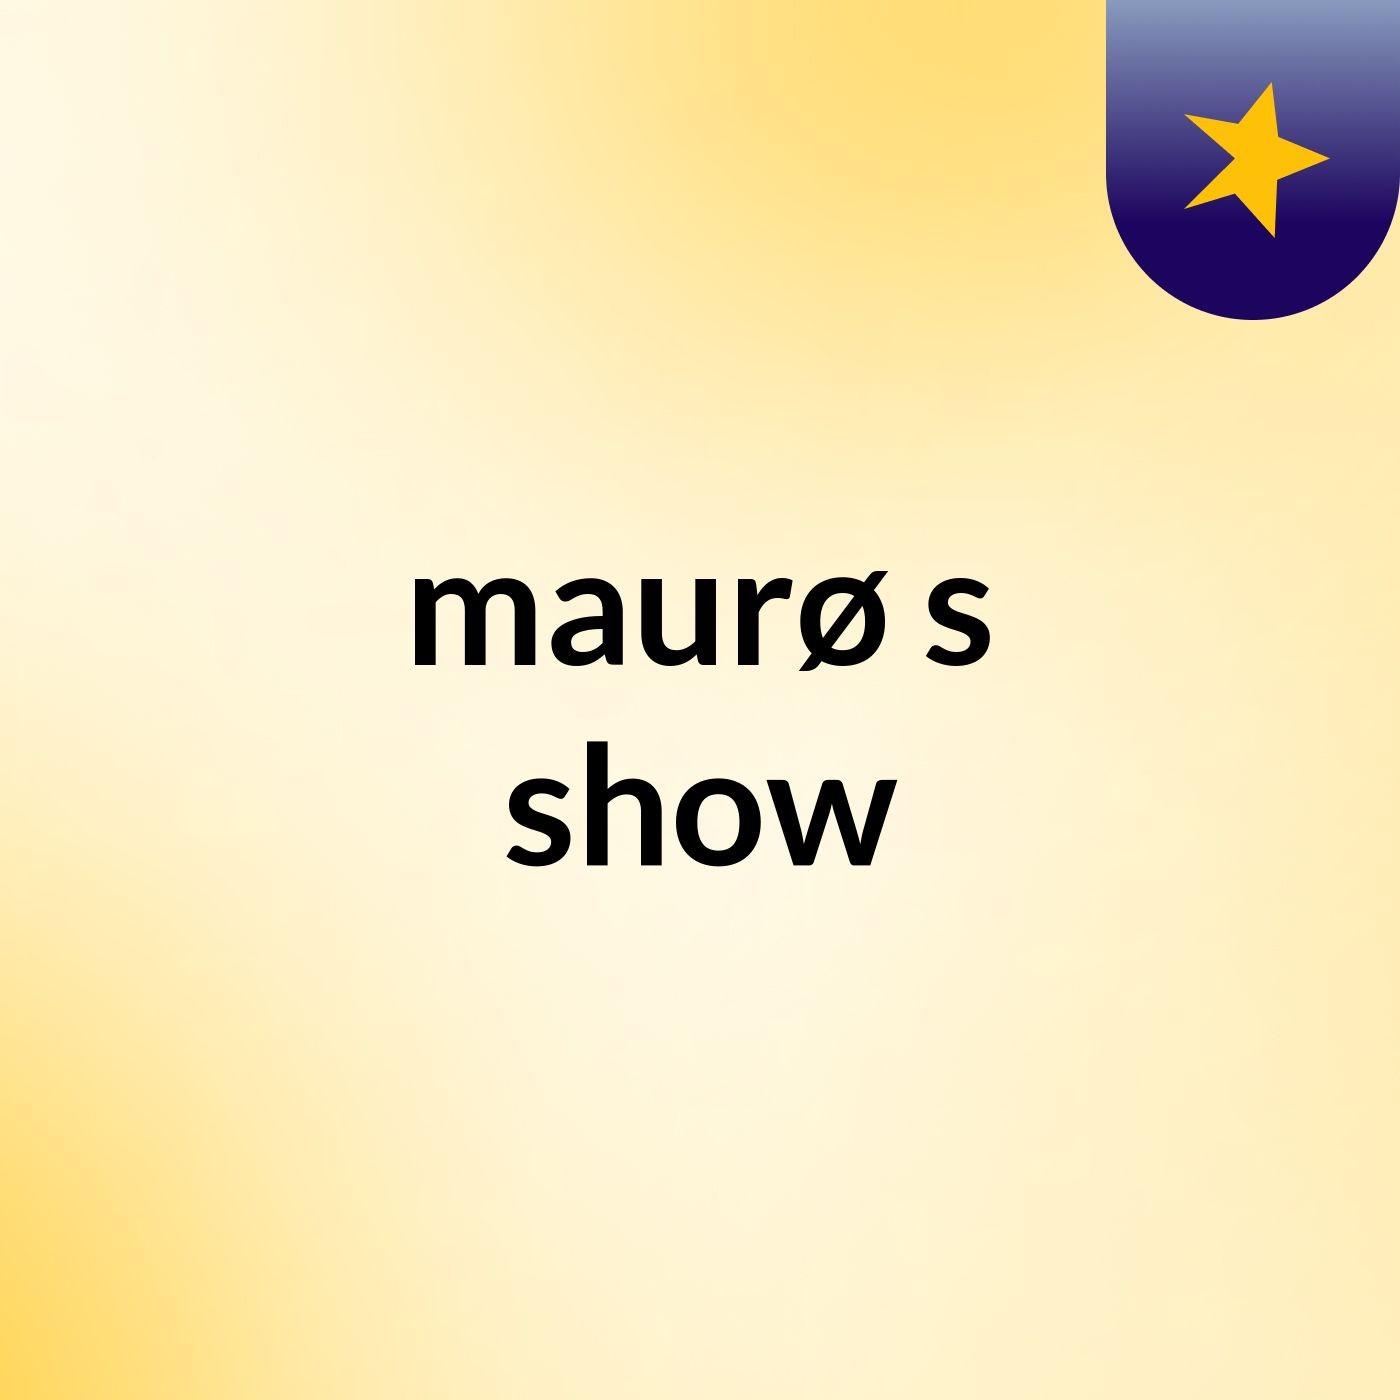 maurø's show